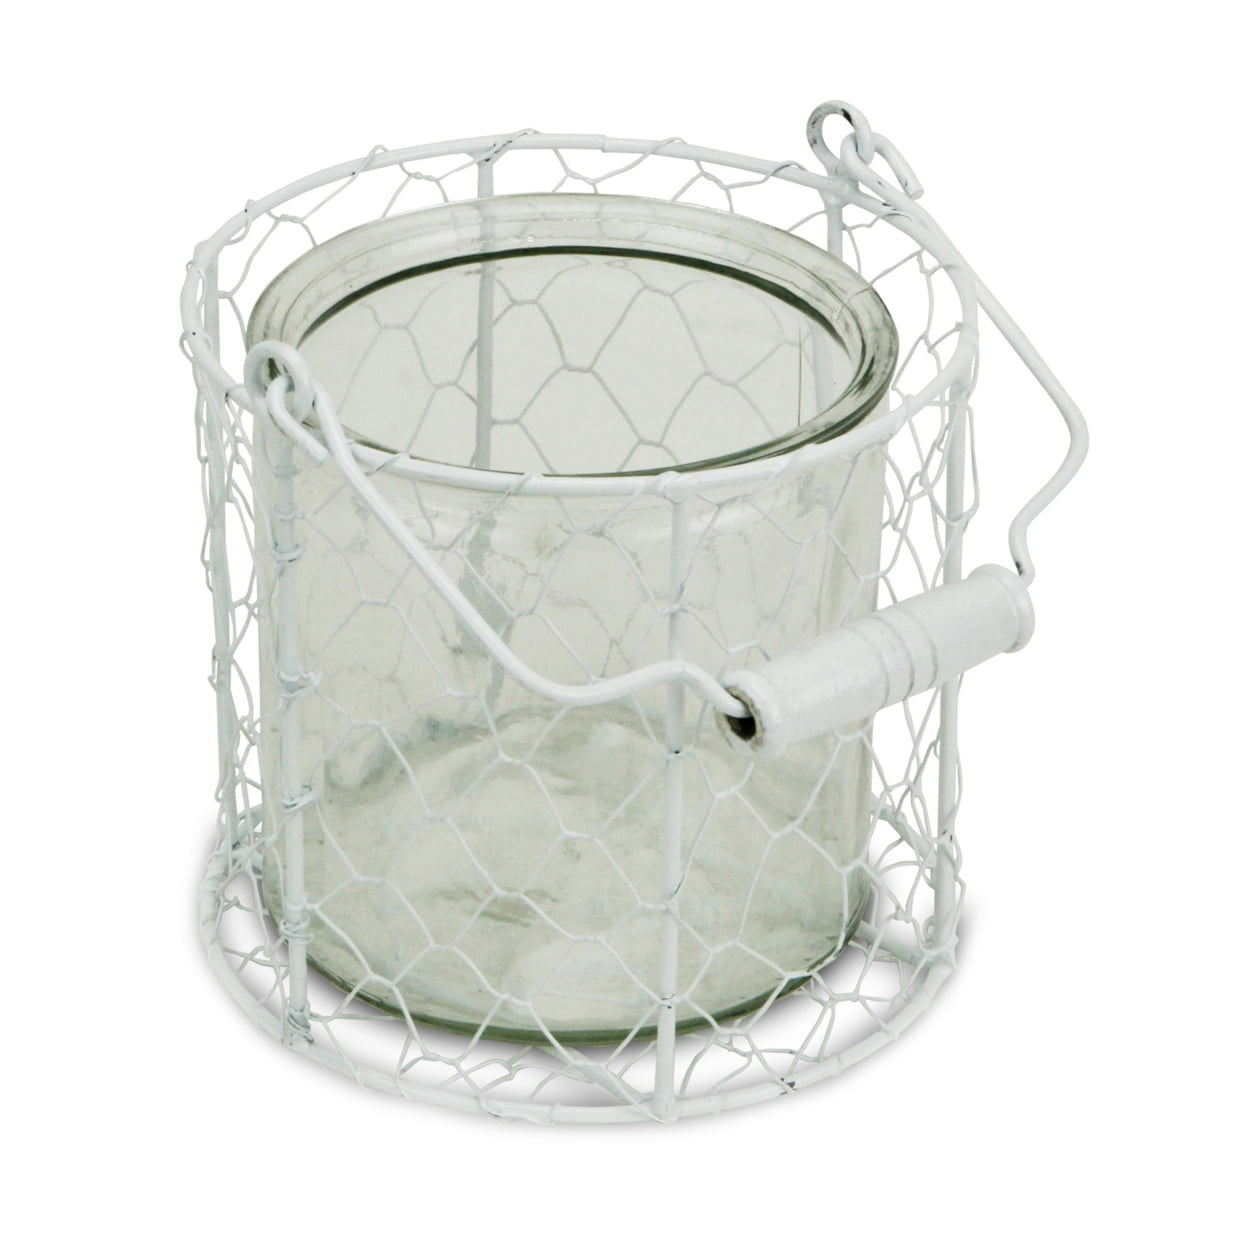 15s001wl Round Glass Jar In Wire Basket, White - Large